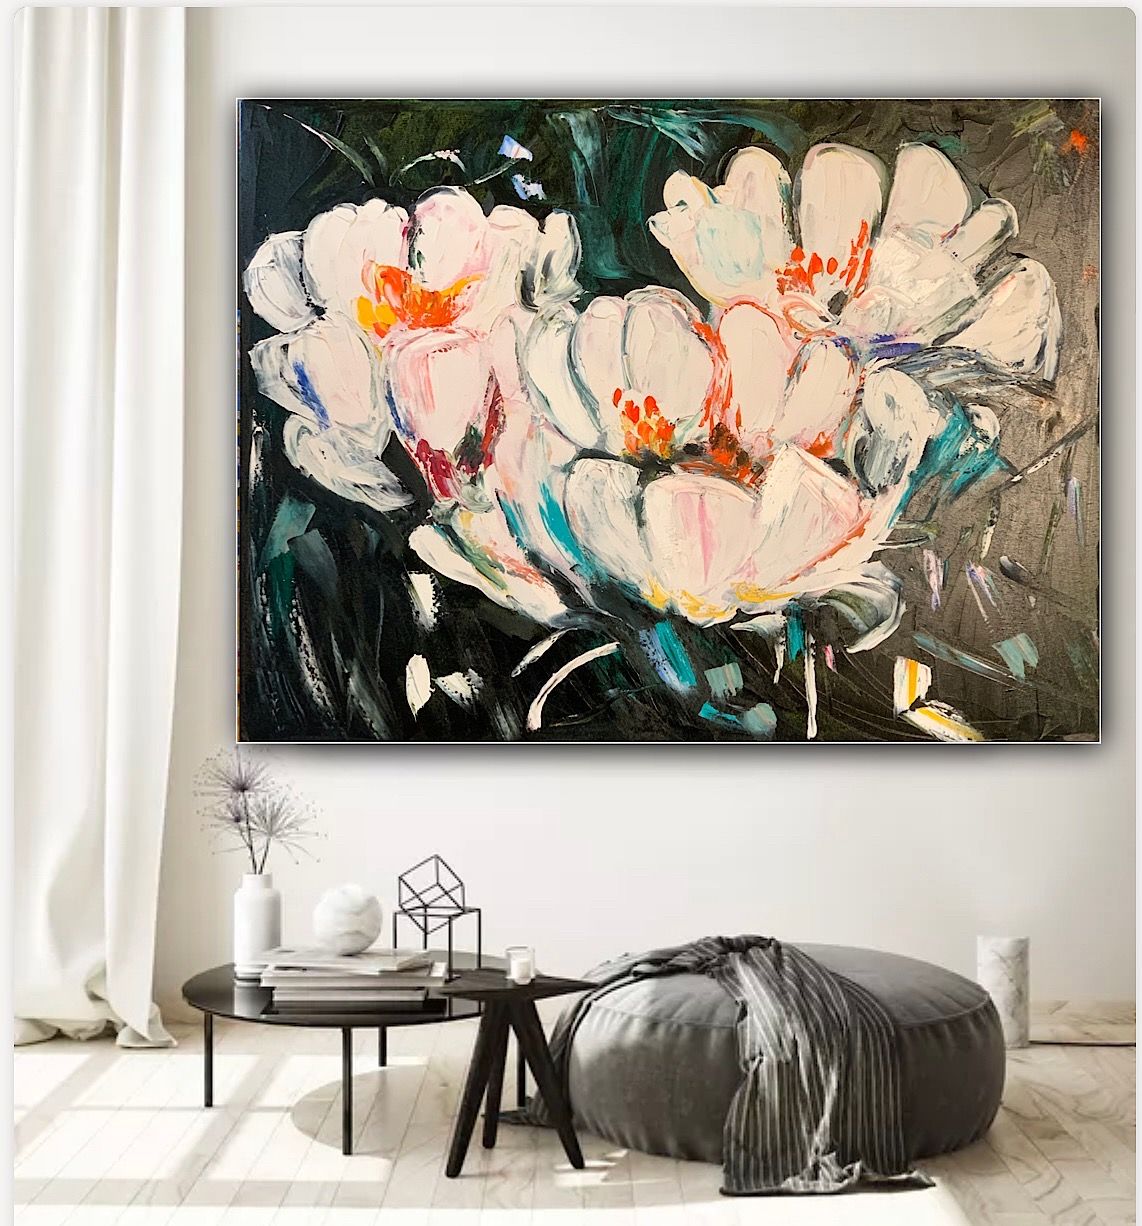 Sea of tulips oil painting 100 x 80cm